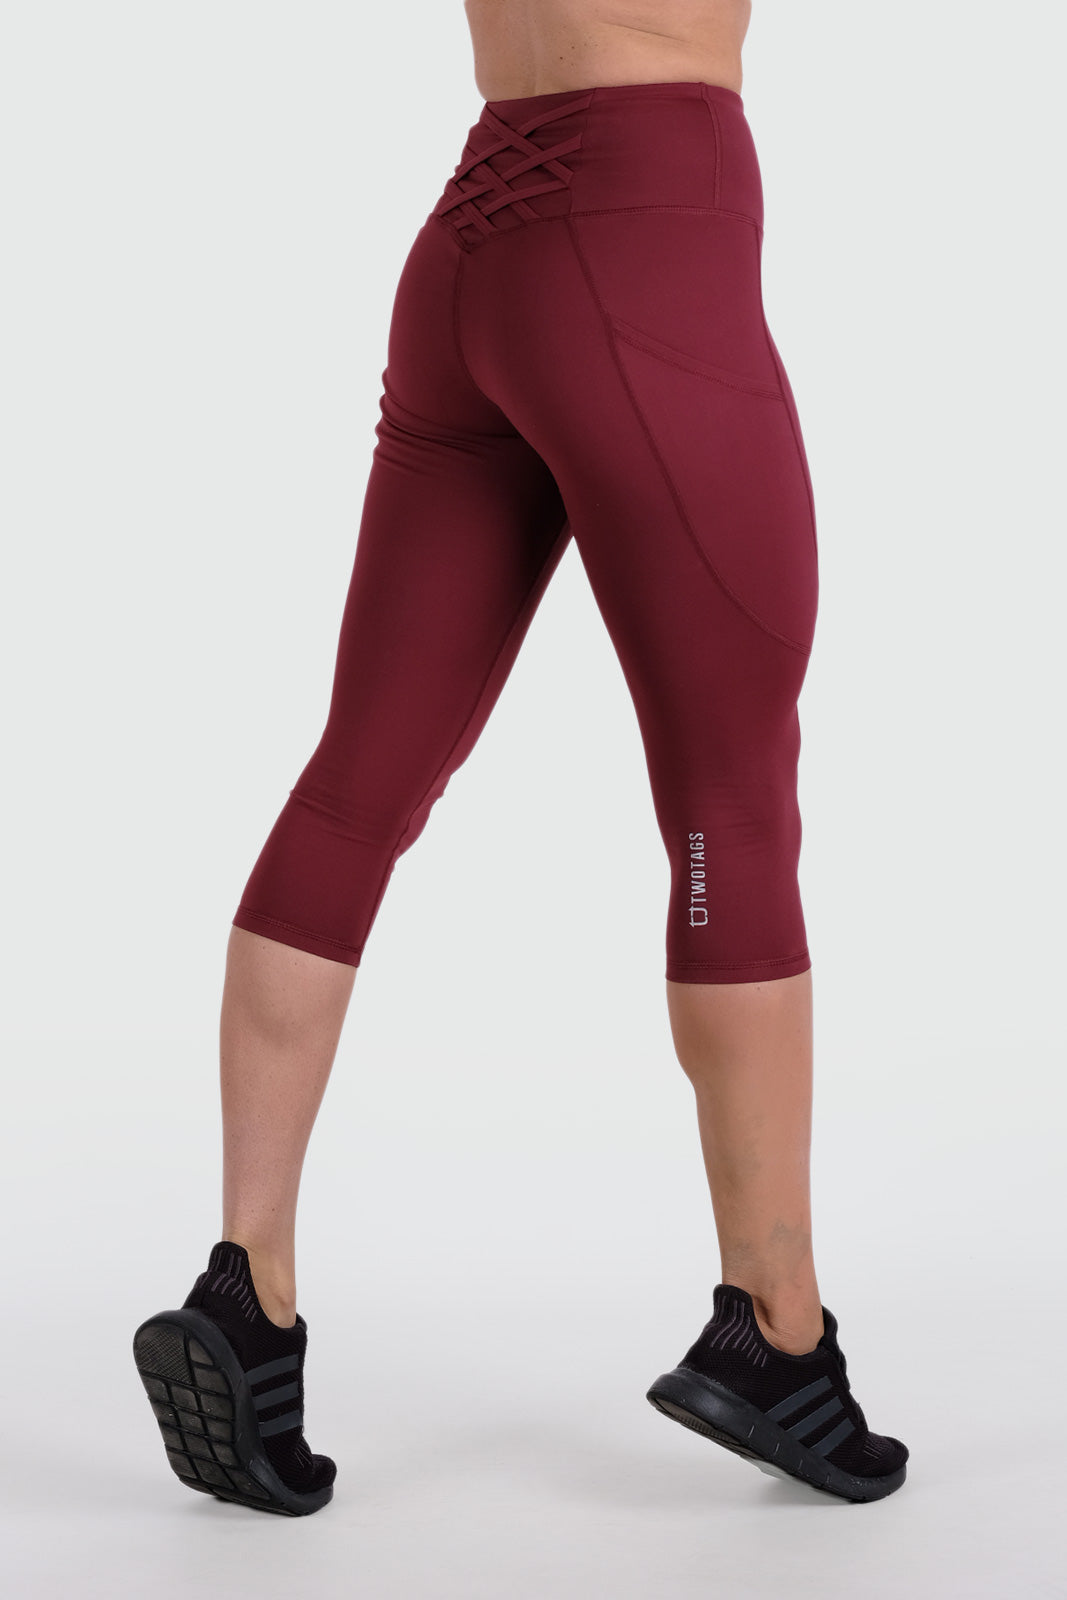 Buy Cheapestbuy Women's Plus Size Capri Leggings Lightweight Soft Crop  Leggings Basic Capris Yoga Pants, Grey, 1X at Amazon.in